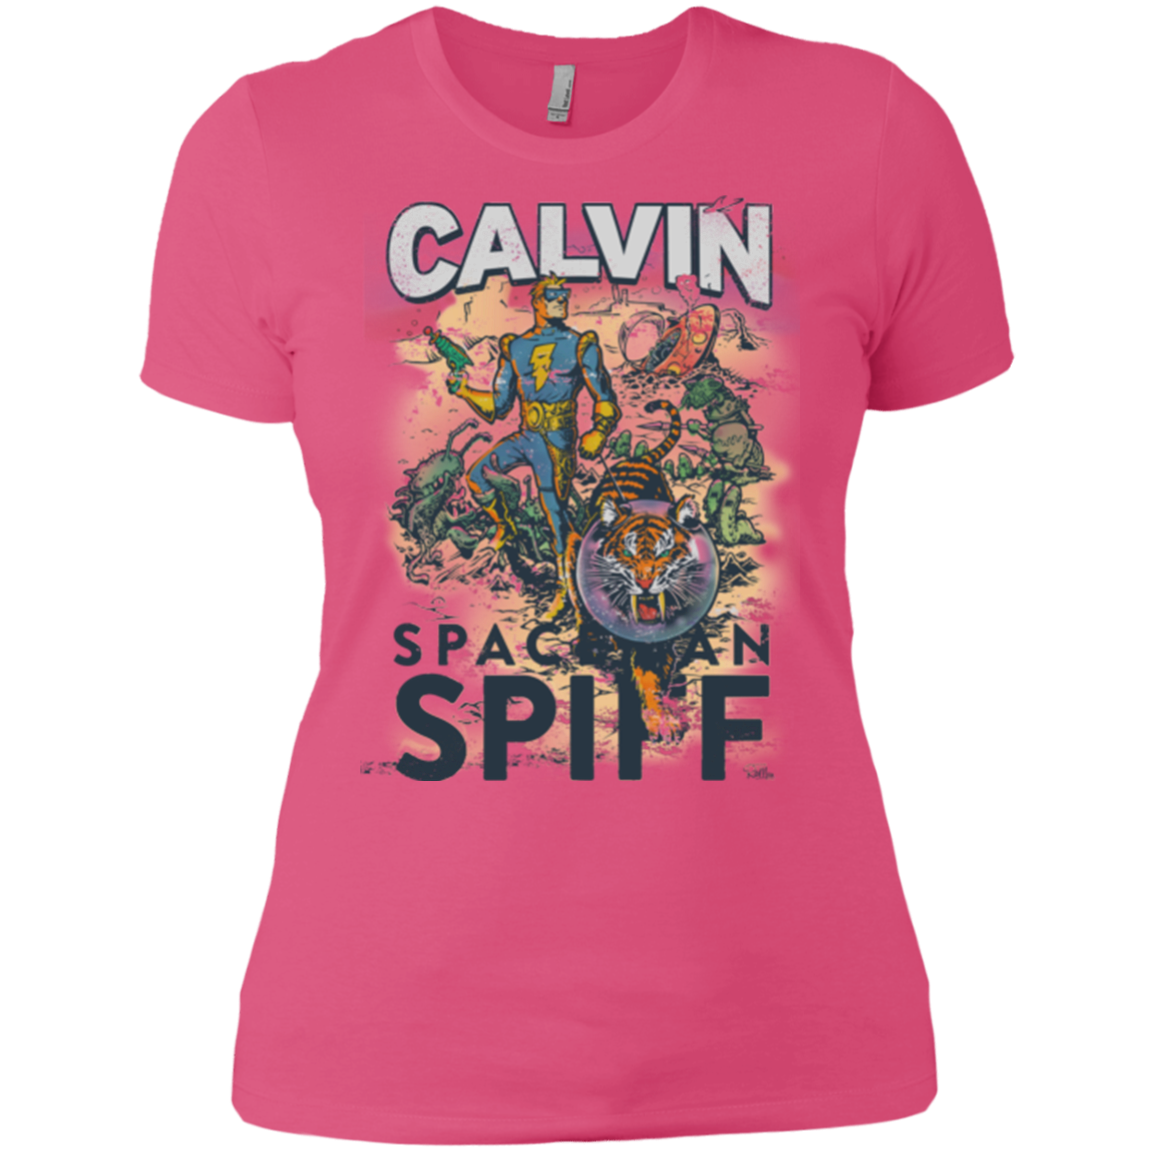 Spaceman Spiff Women's Premium T-Shirt